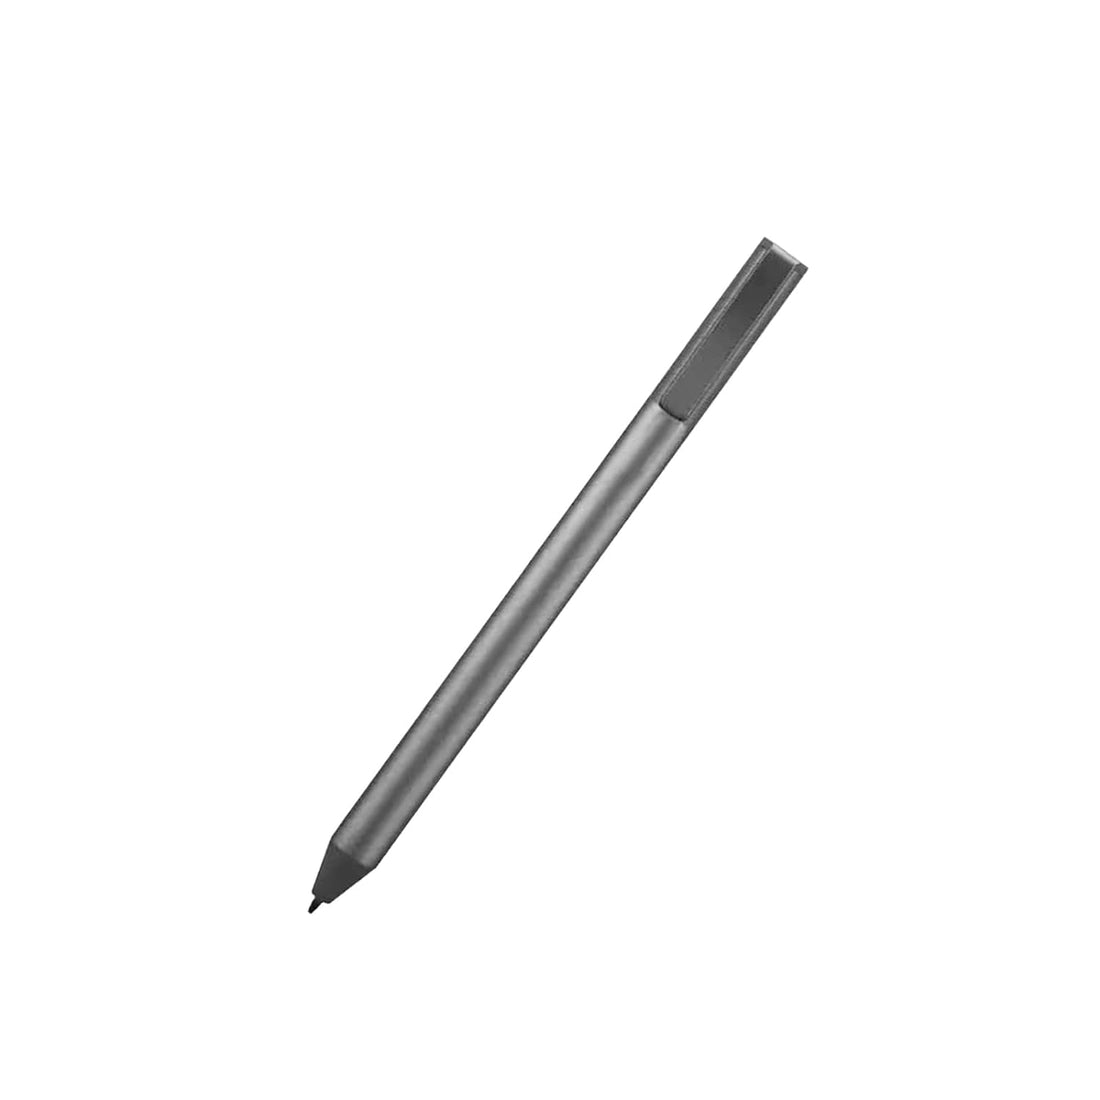 USI Stylus Pen for Lenovo USI Pen (GX81B10212) Compatible with Lenovo Flex 5i,Flex 5 Chromebook 13/14,Flex 5 Chromebook